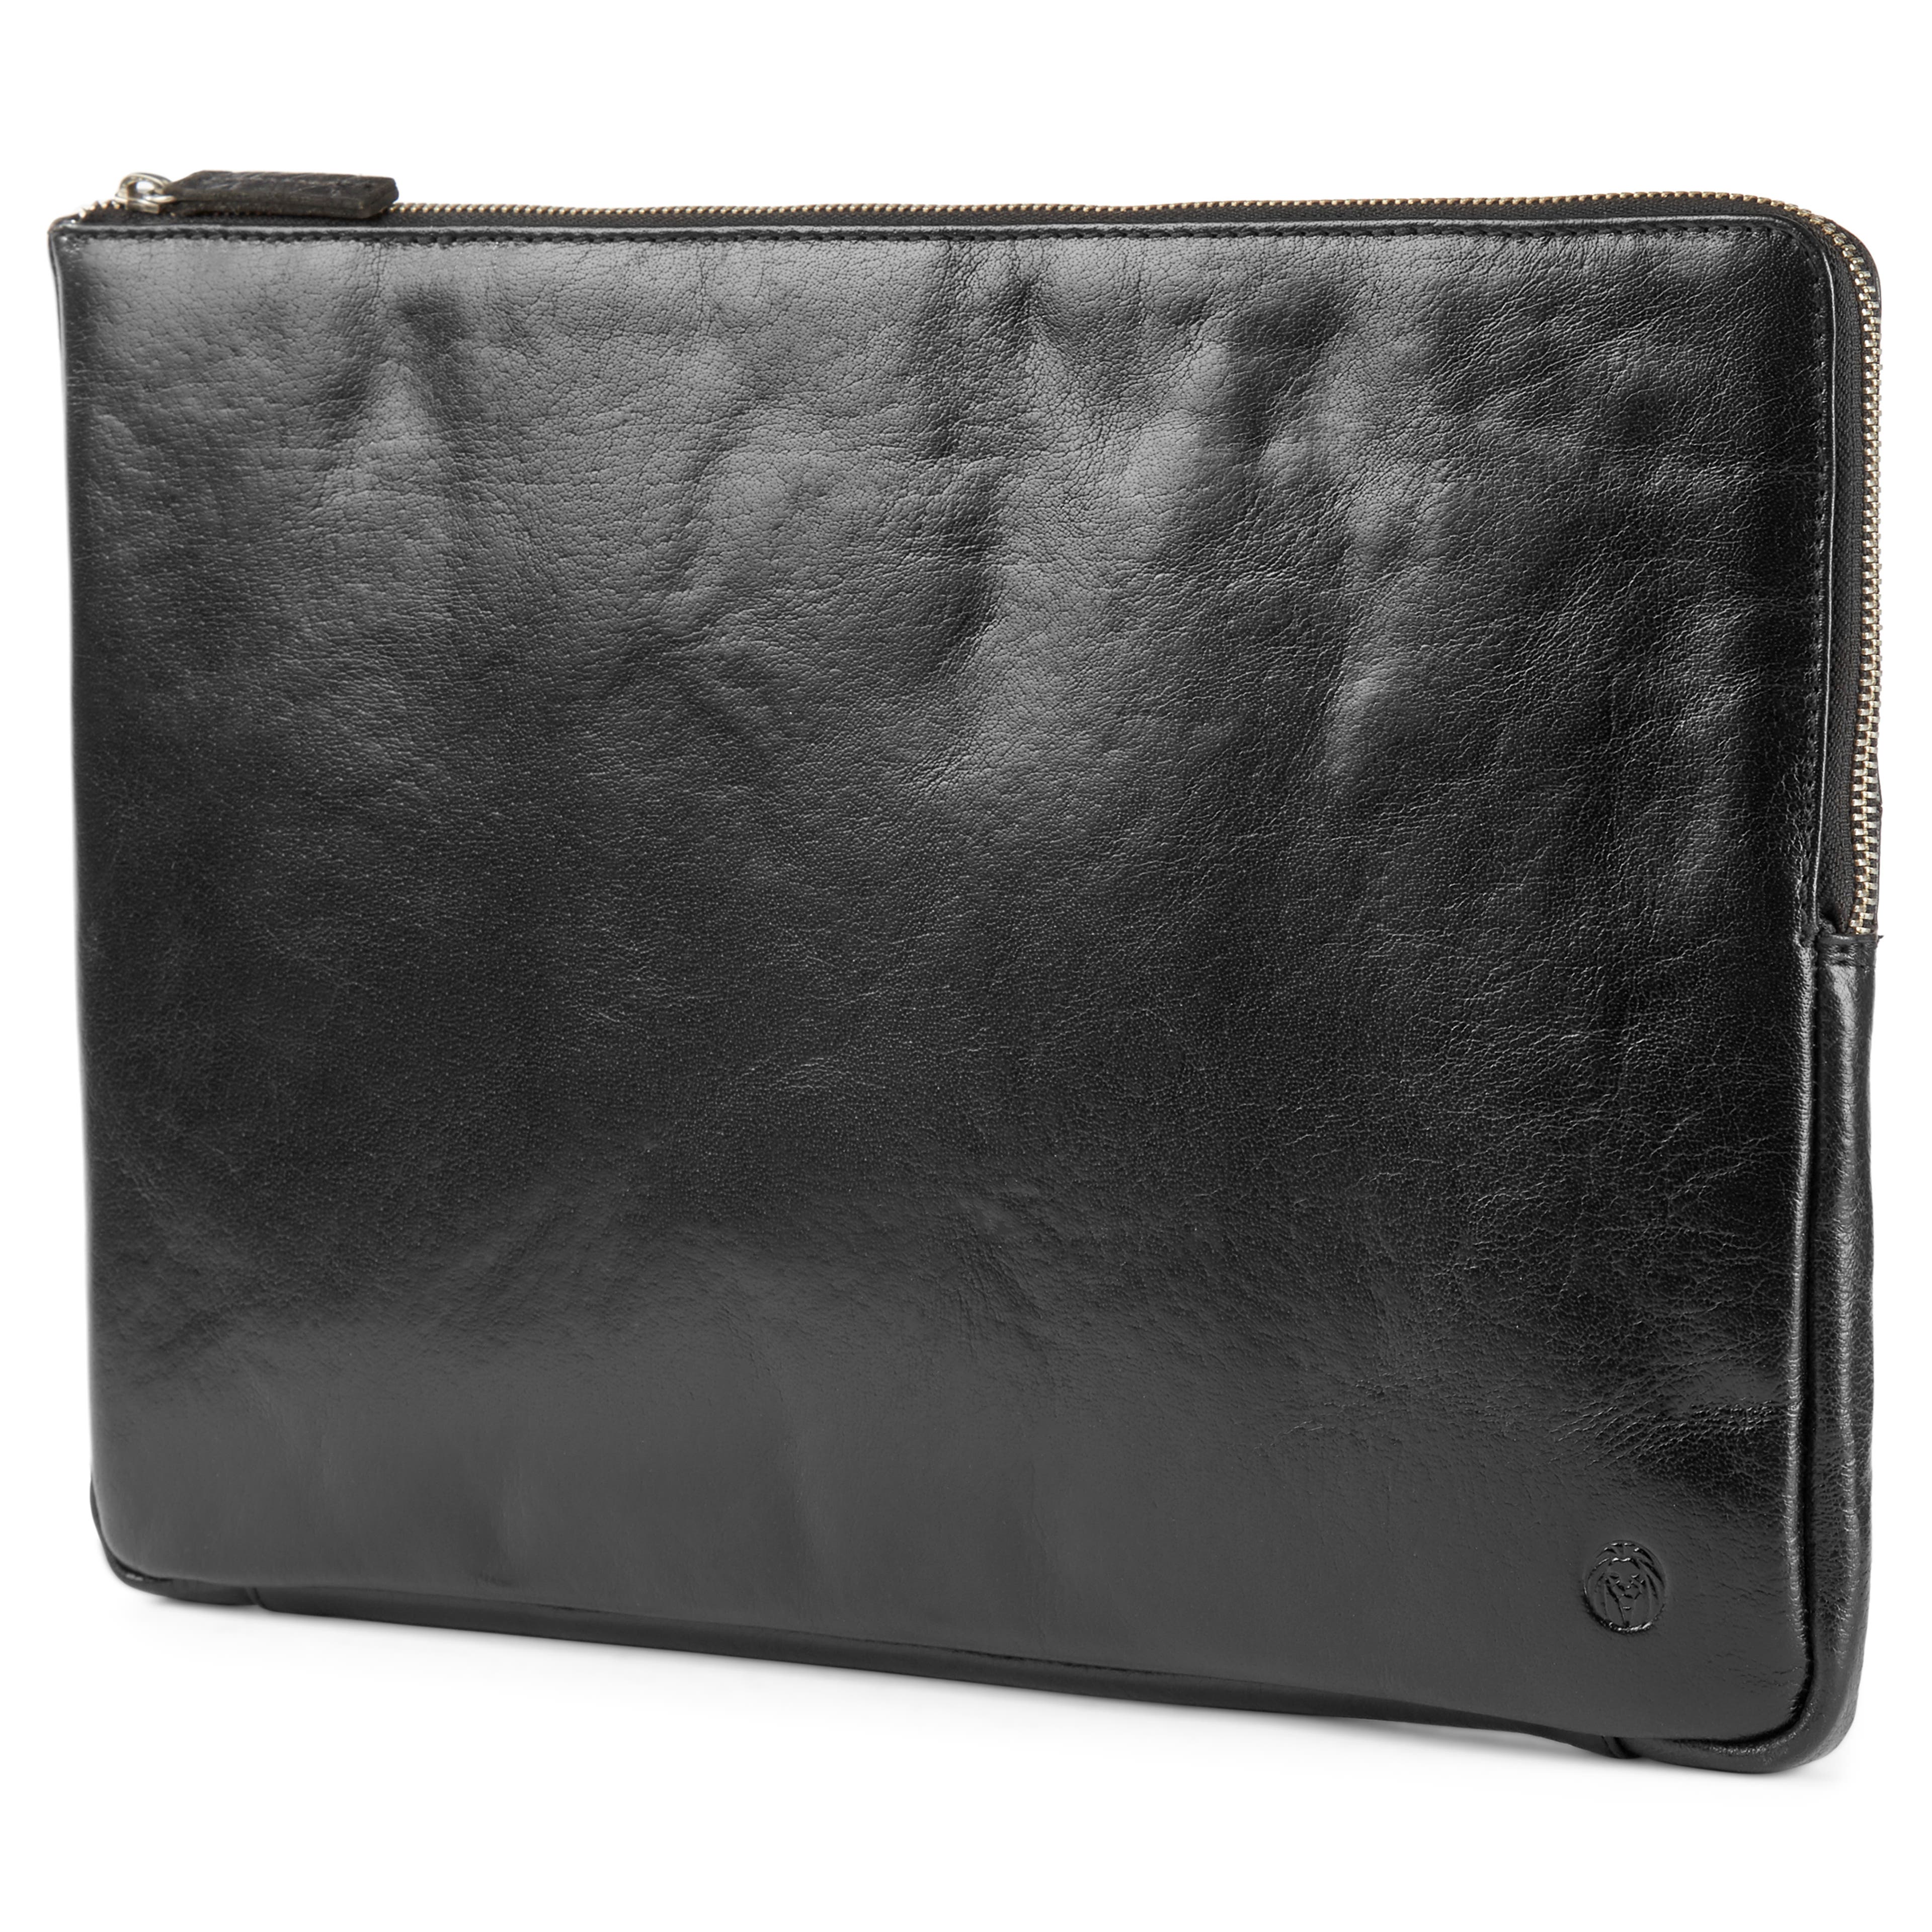 California Black Small Leather Laptop Sleeve